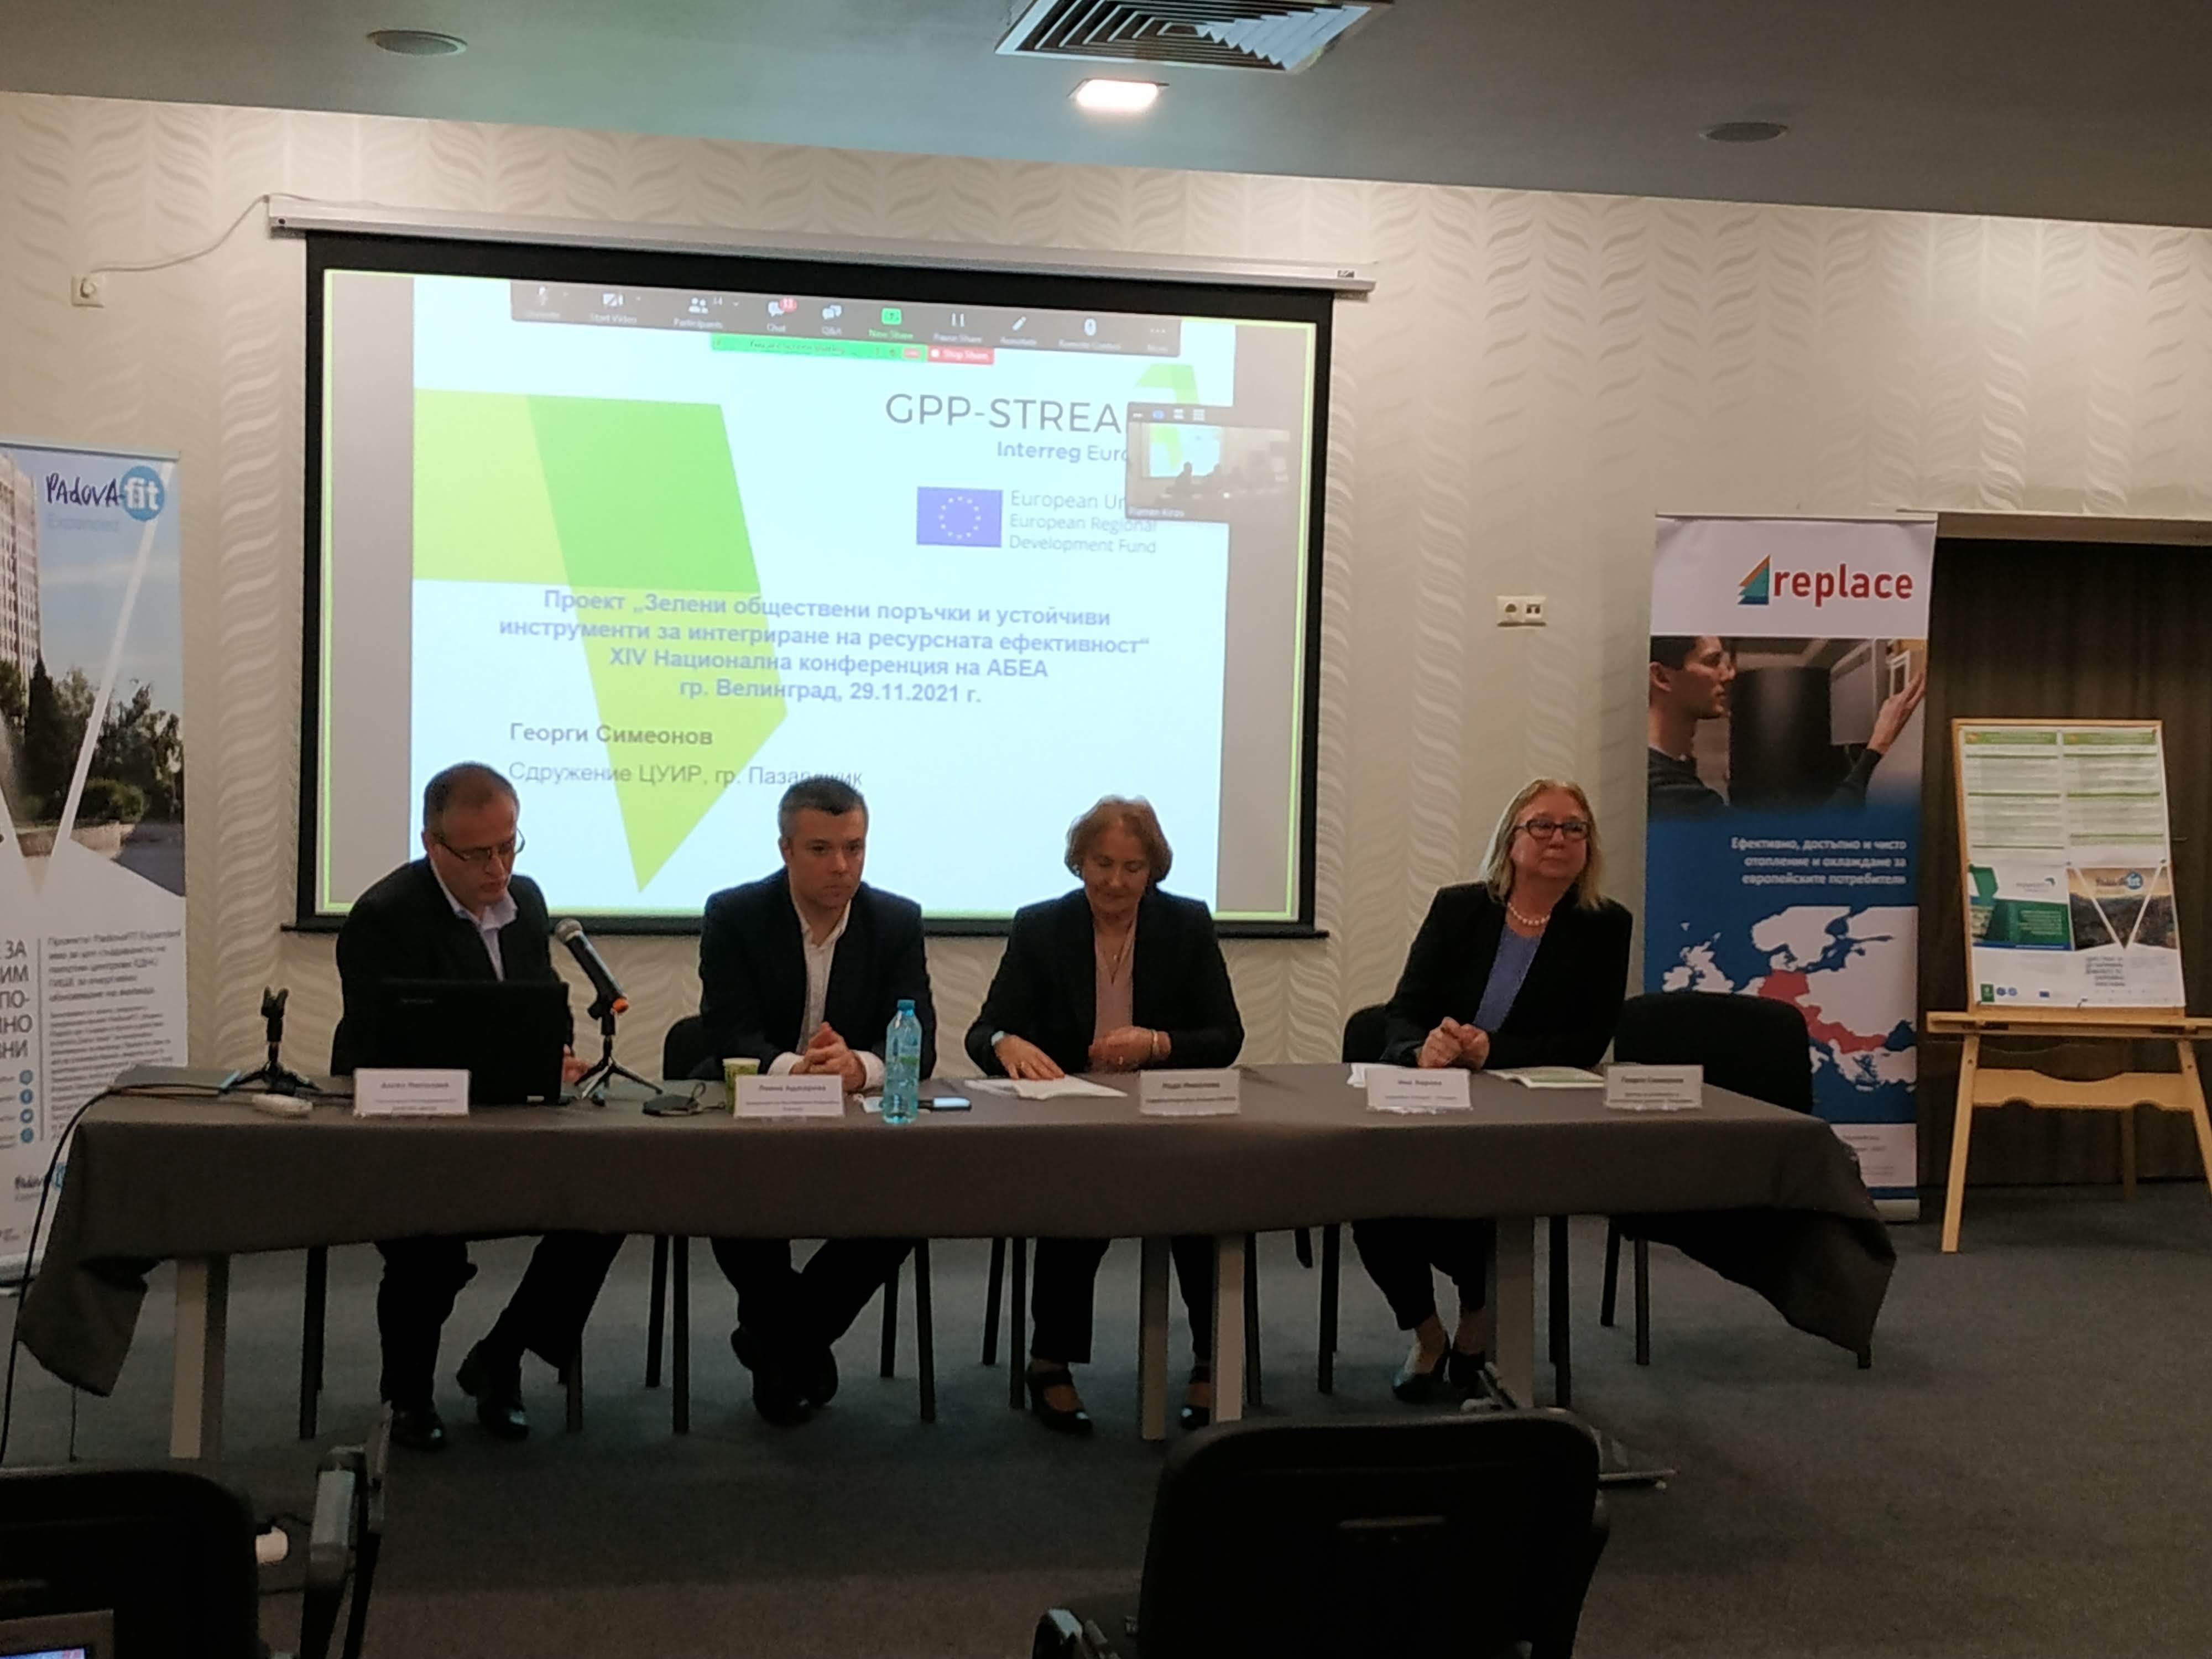 Presentation of GPP-STREAM to Bulgarian Stakeholders